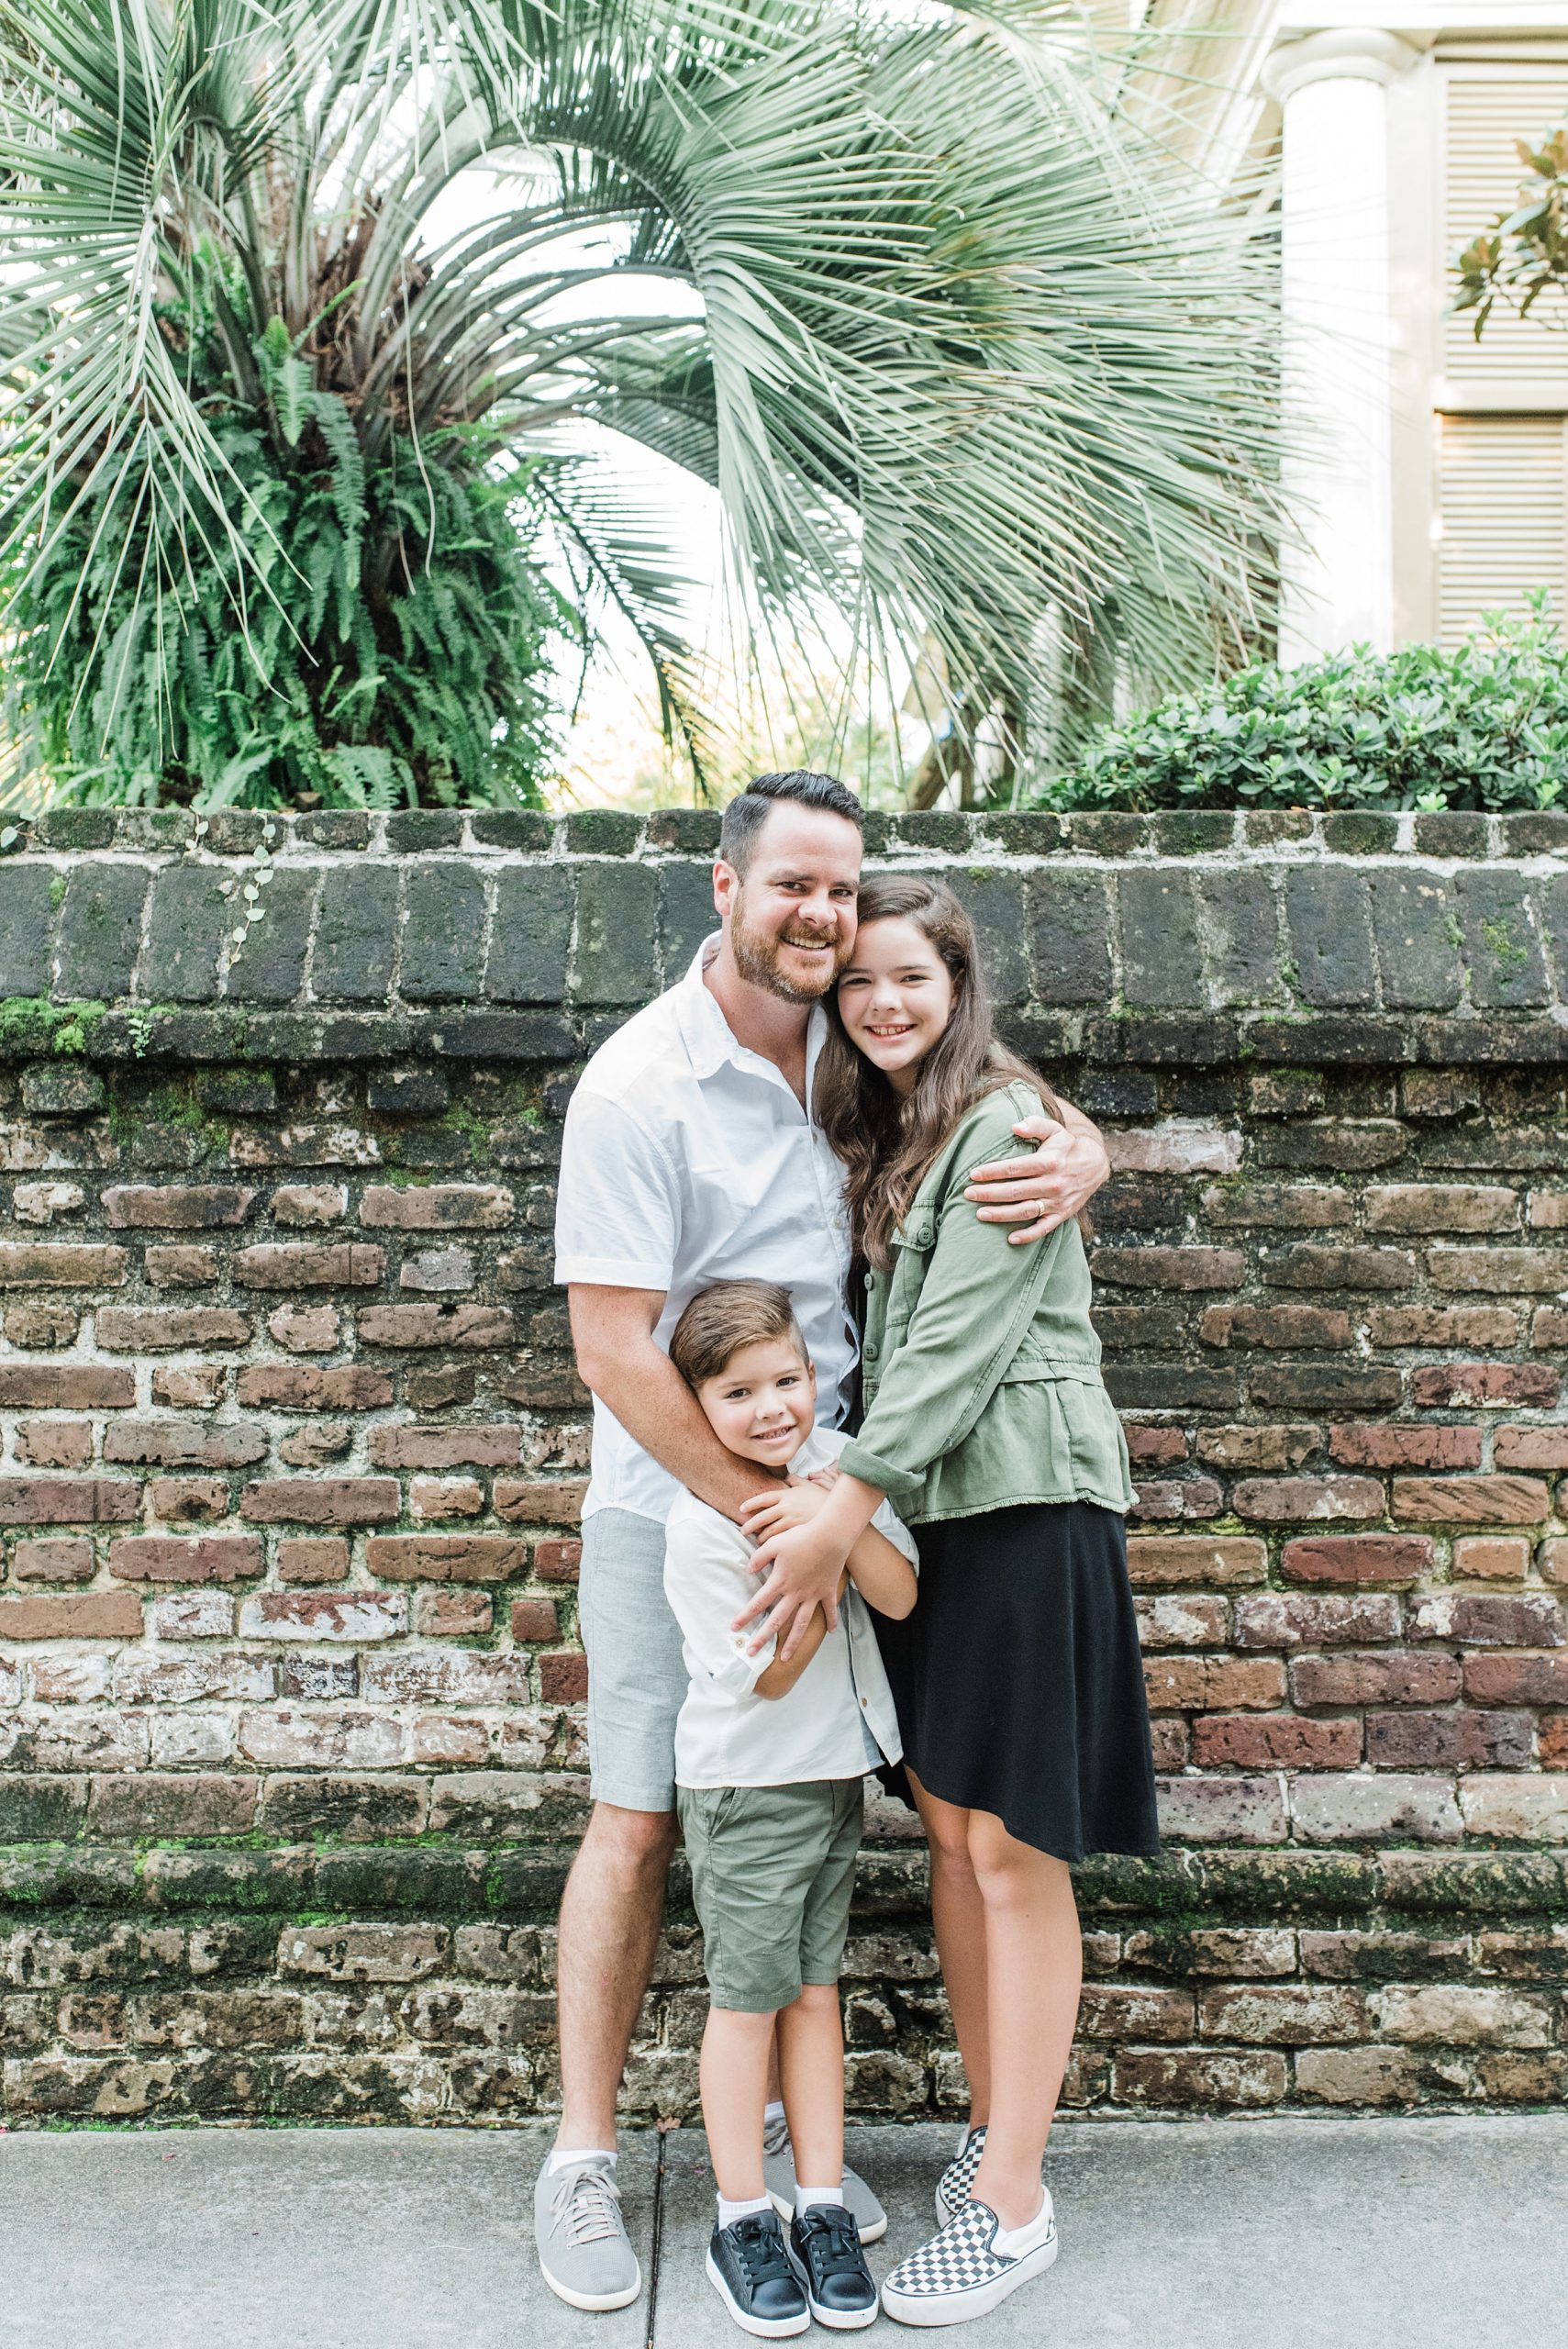 family poses by brick wall in South Carolina